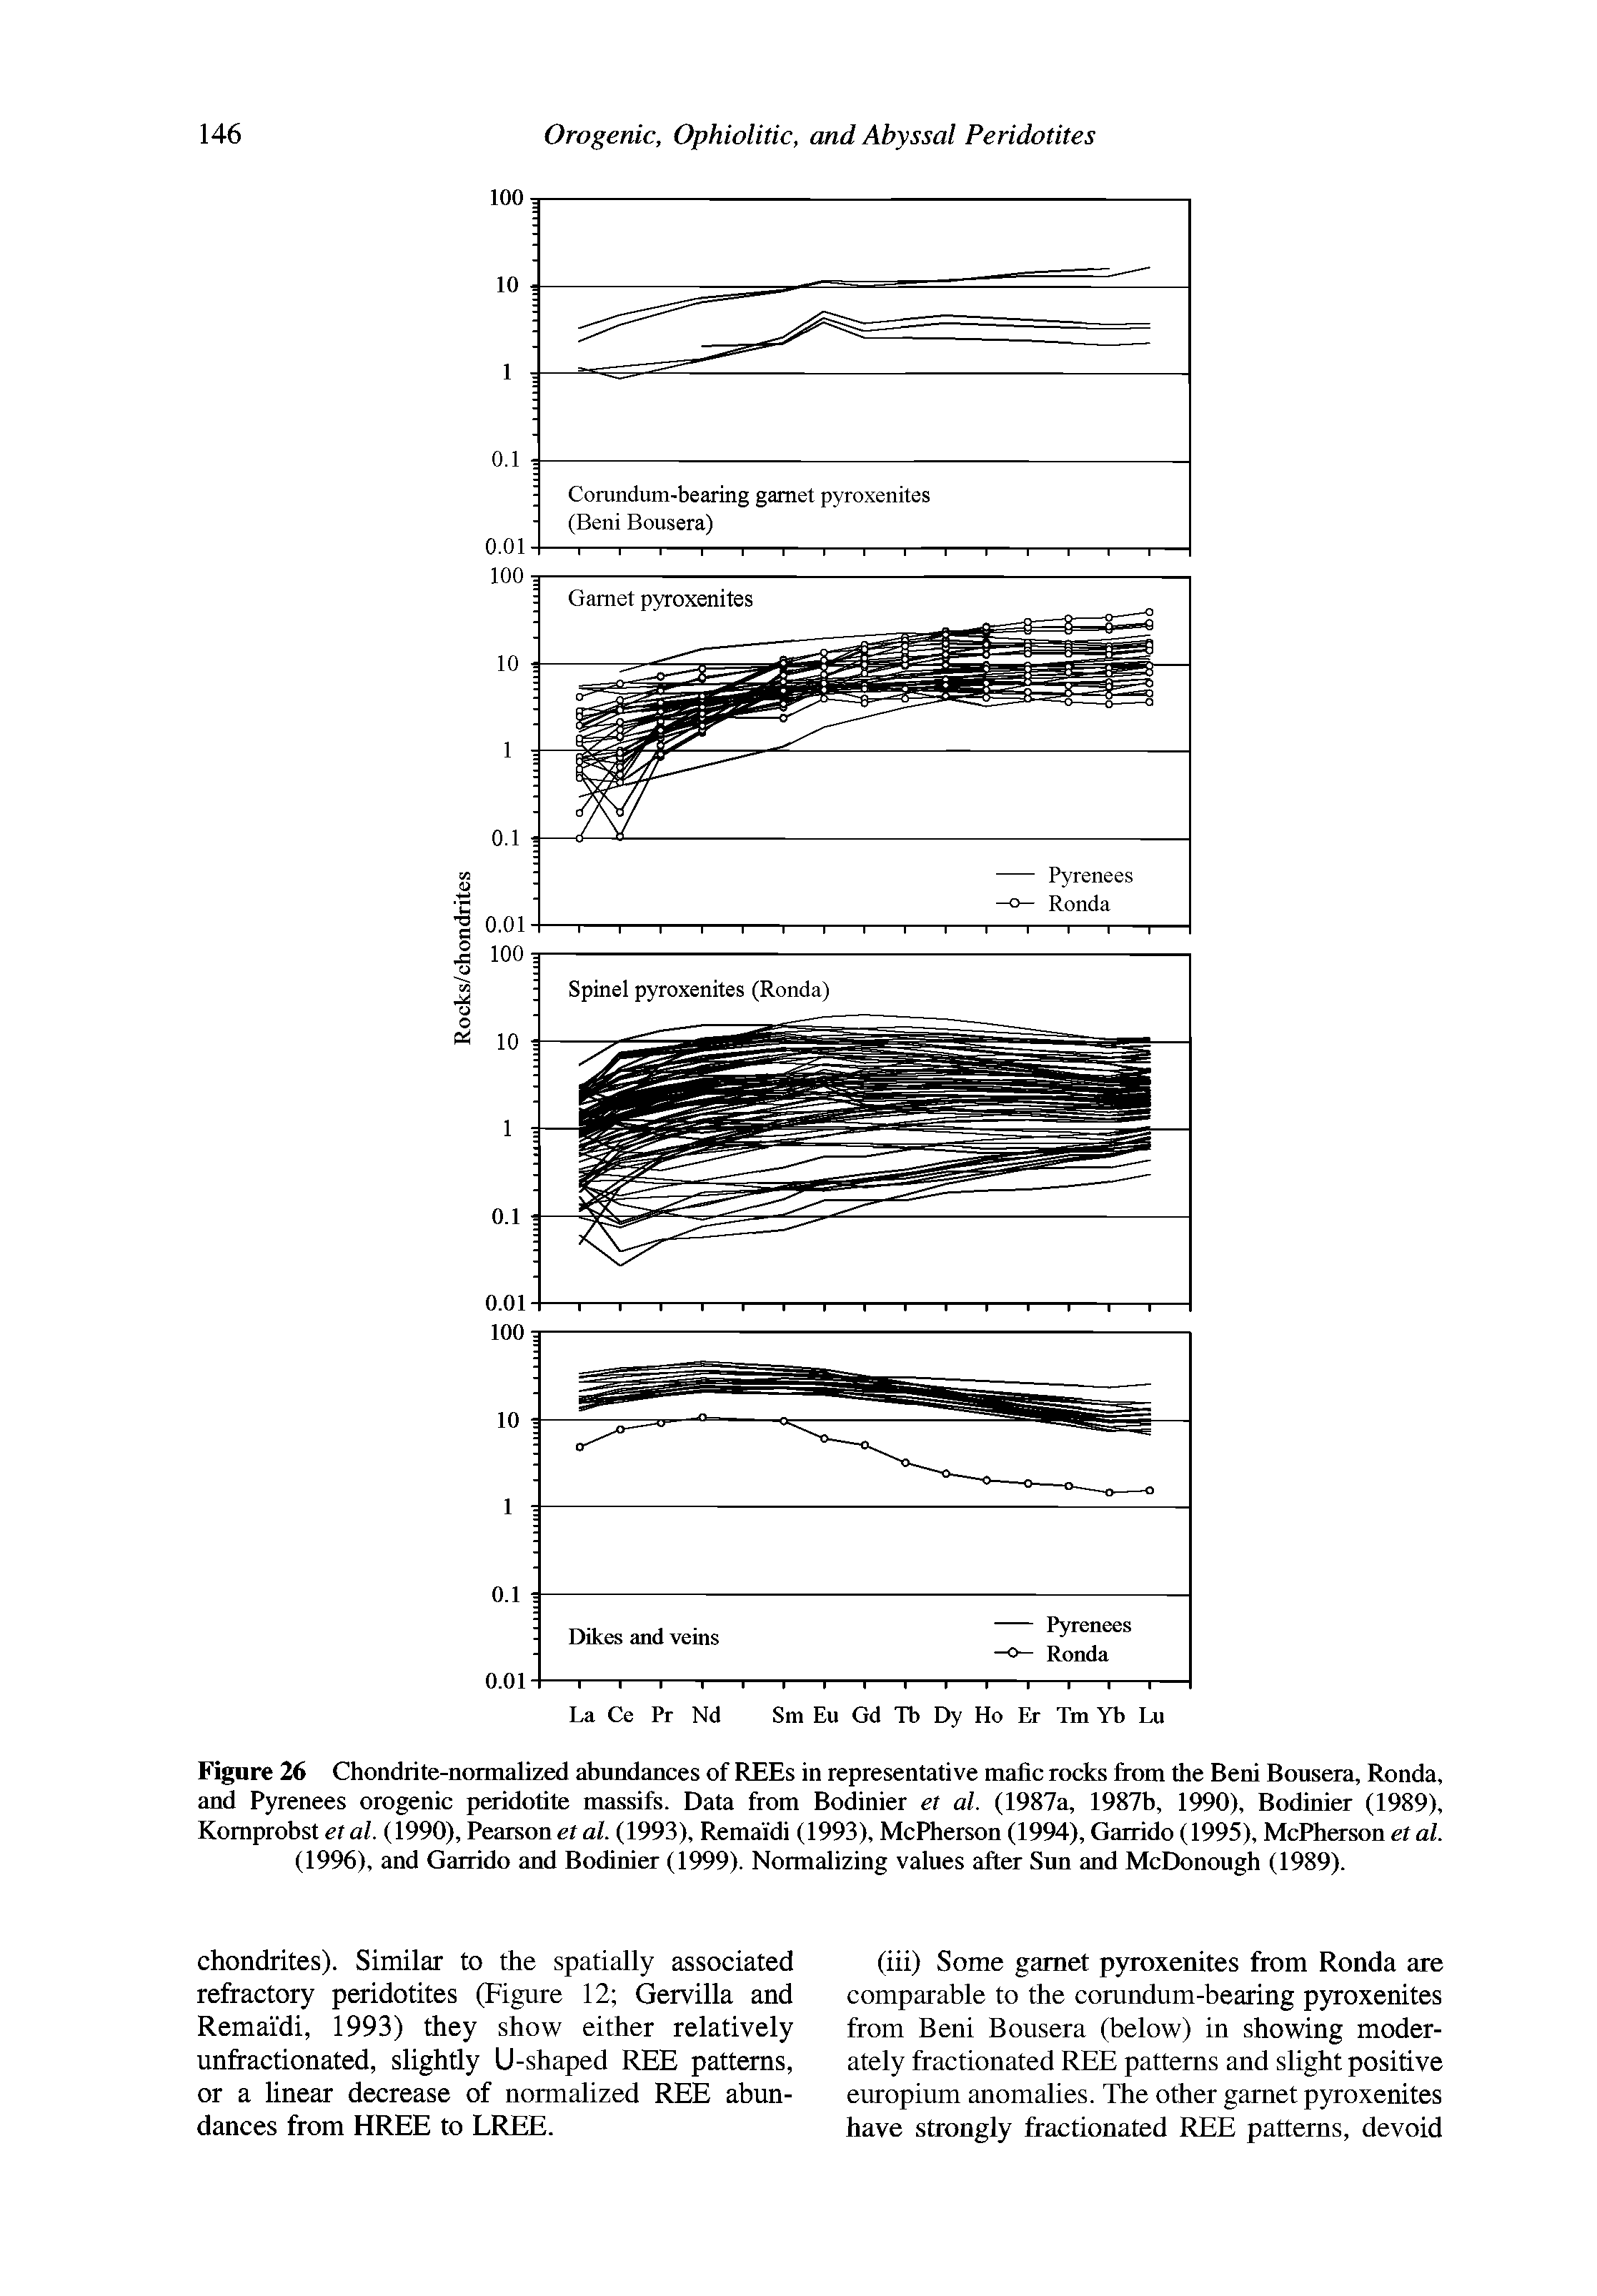 Figure 26 Chondrite-nomialized abundances of REEs in representative mafic rocks from the Beni Bousera, Ronda, and Pyrenees orogenic peridotite massifs. Data from Bodinier et al. (1987a, 1987b, 1990), Bodinier (1989), Komprobst et al. (1990), Pearson et al. (1993), Remaidi (1993), McPherson (1994), Garrido (1995), McPherson et al. (1996), and Garrido and Bodinier (1999). Normalizing values after Sun and McDonough (1989).